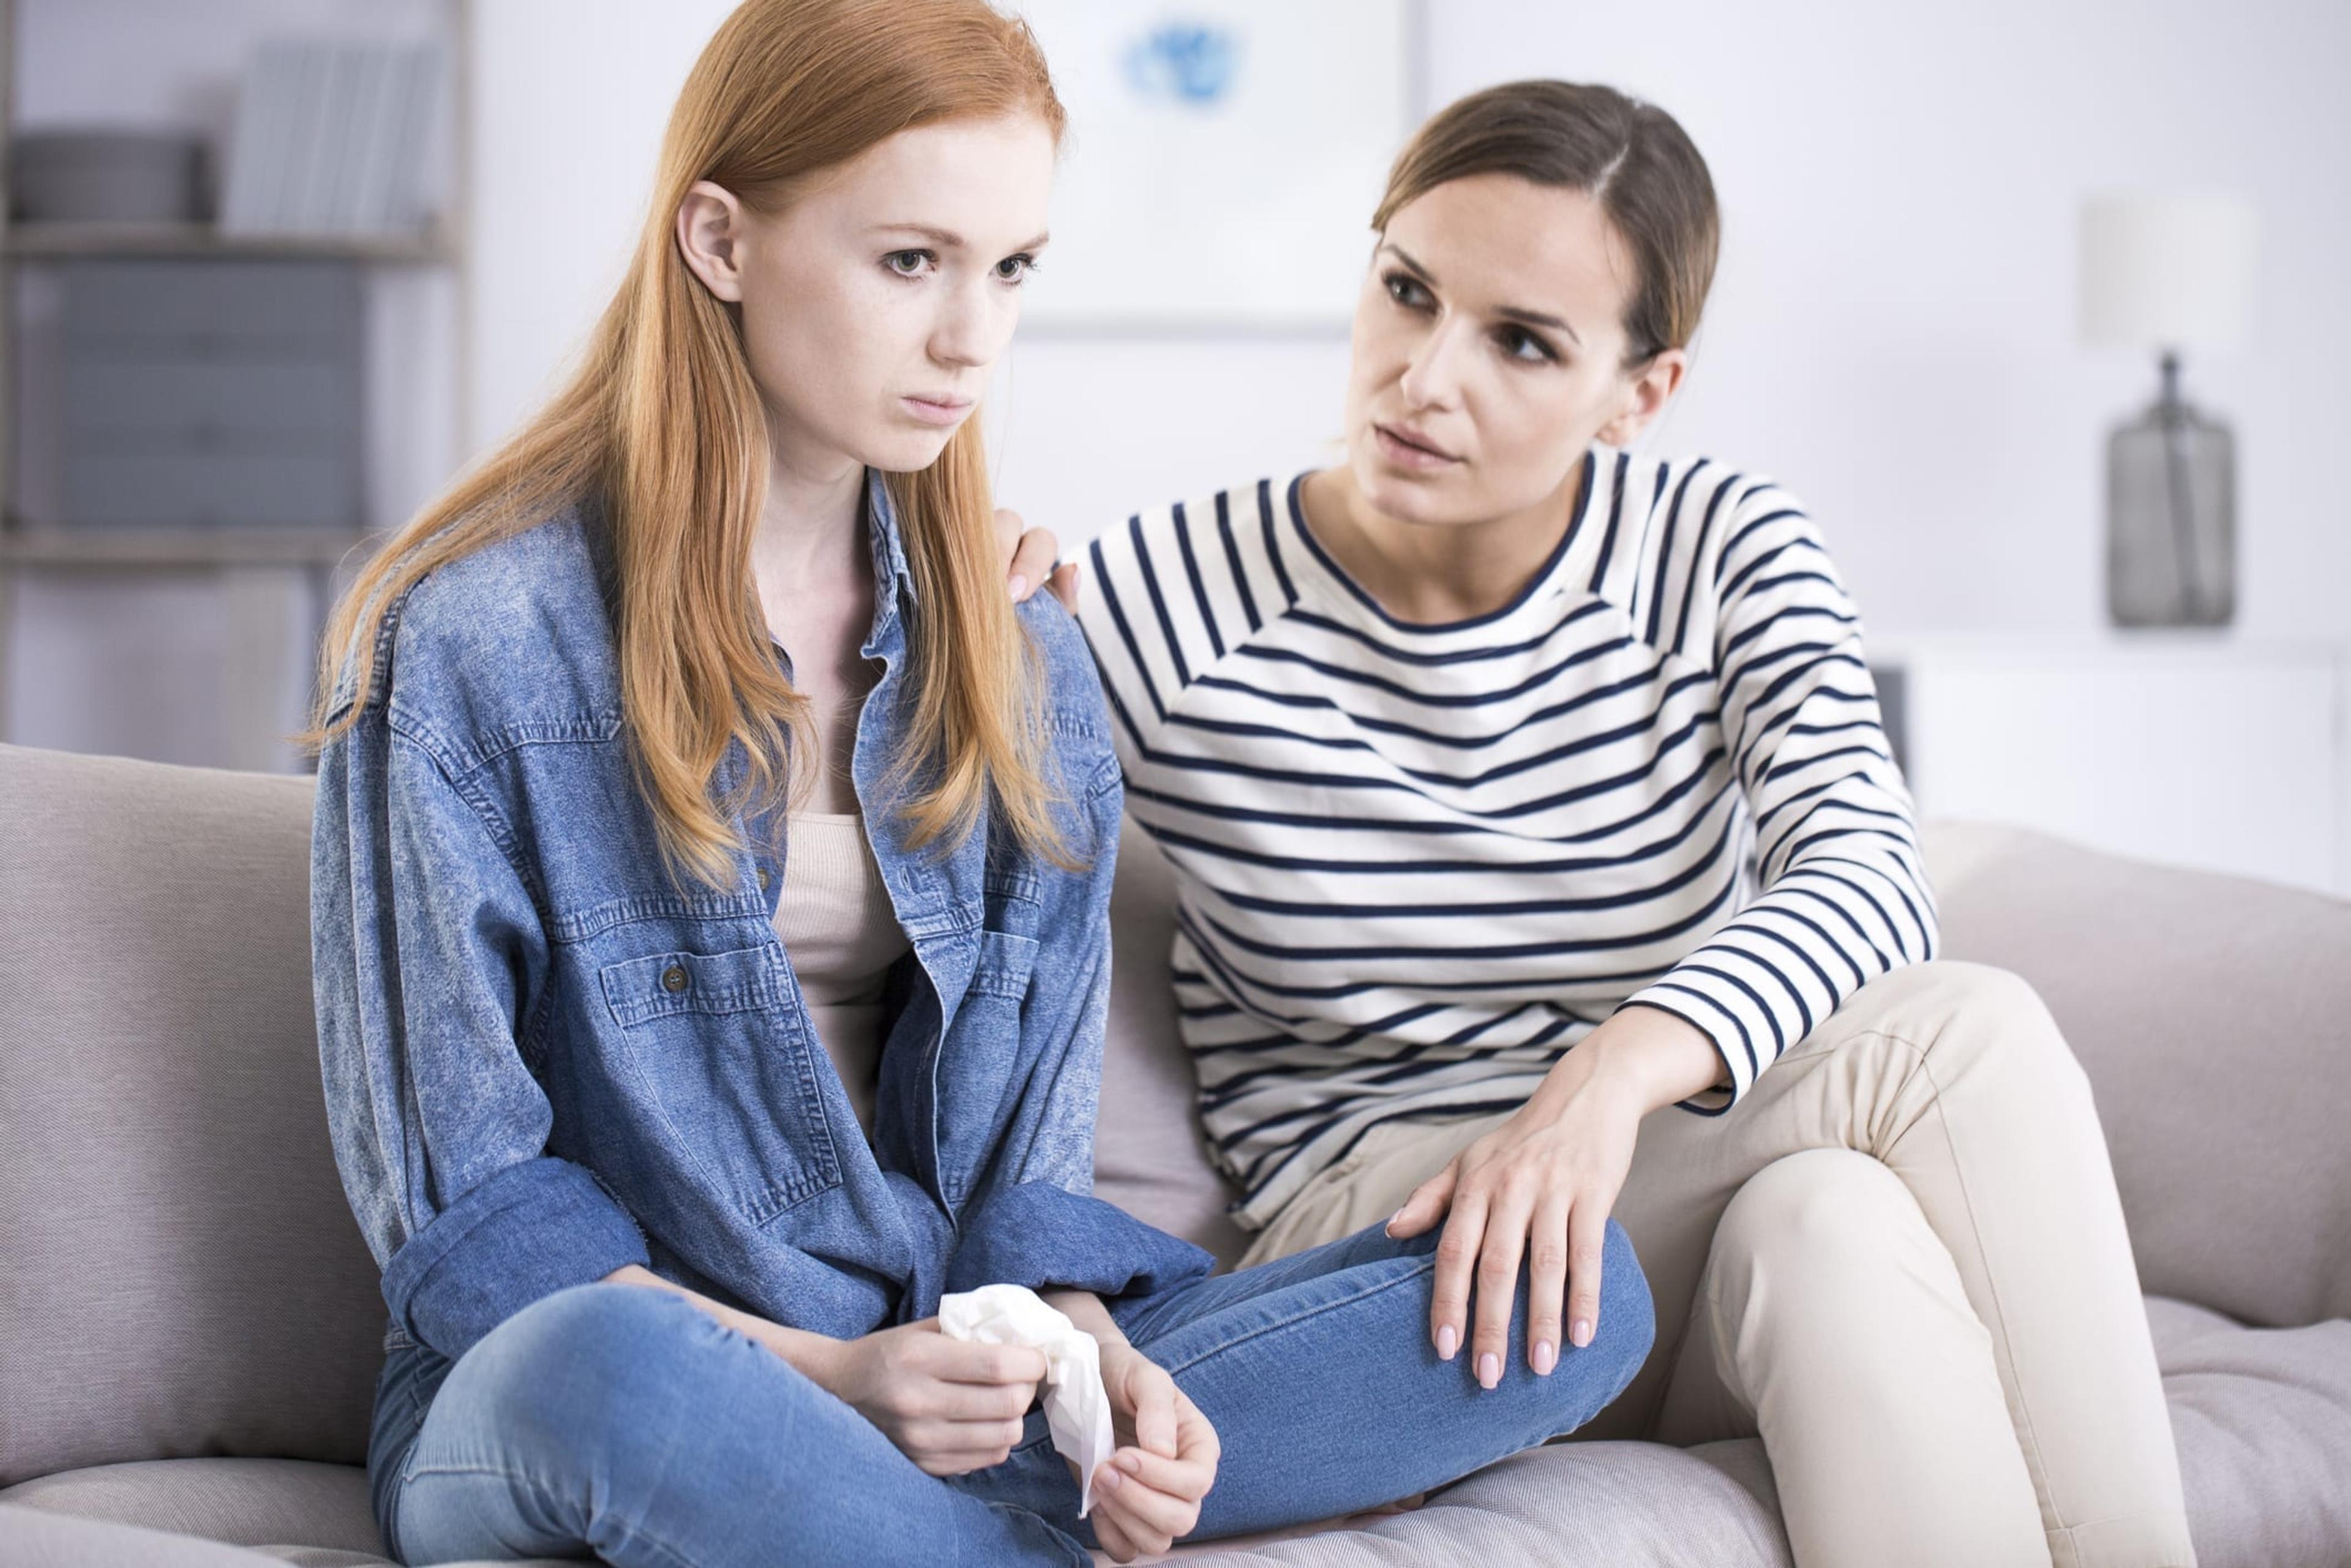 Woman comforting an emotional young teenage girl sitting